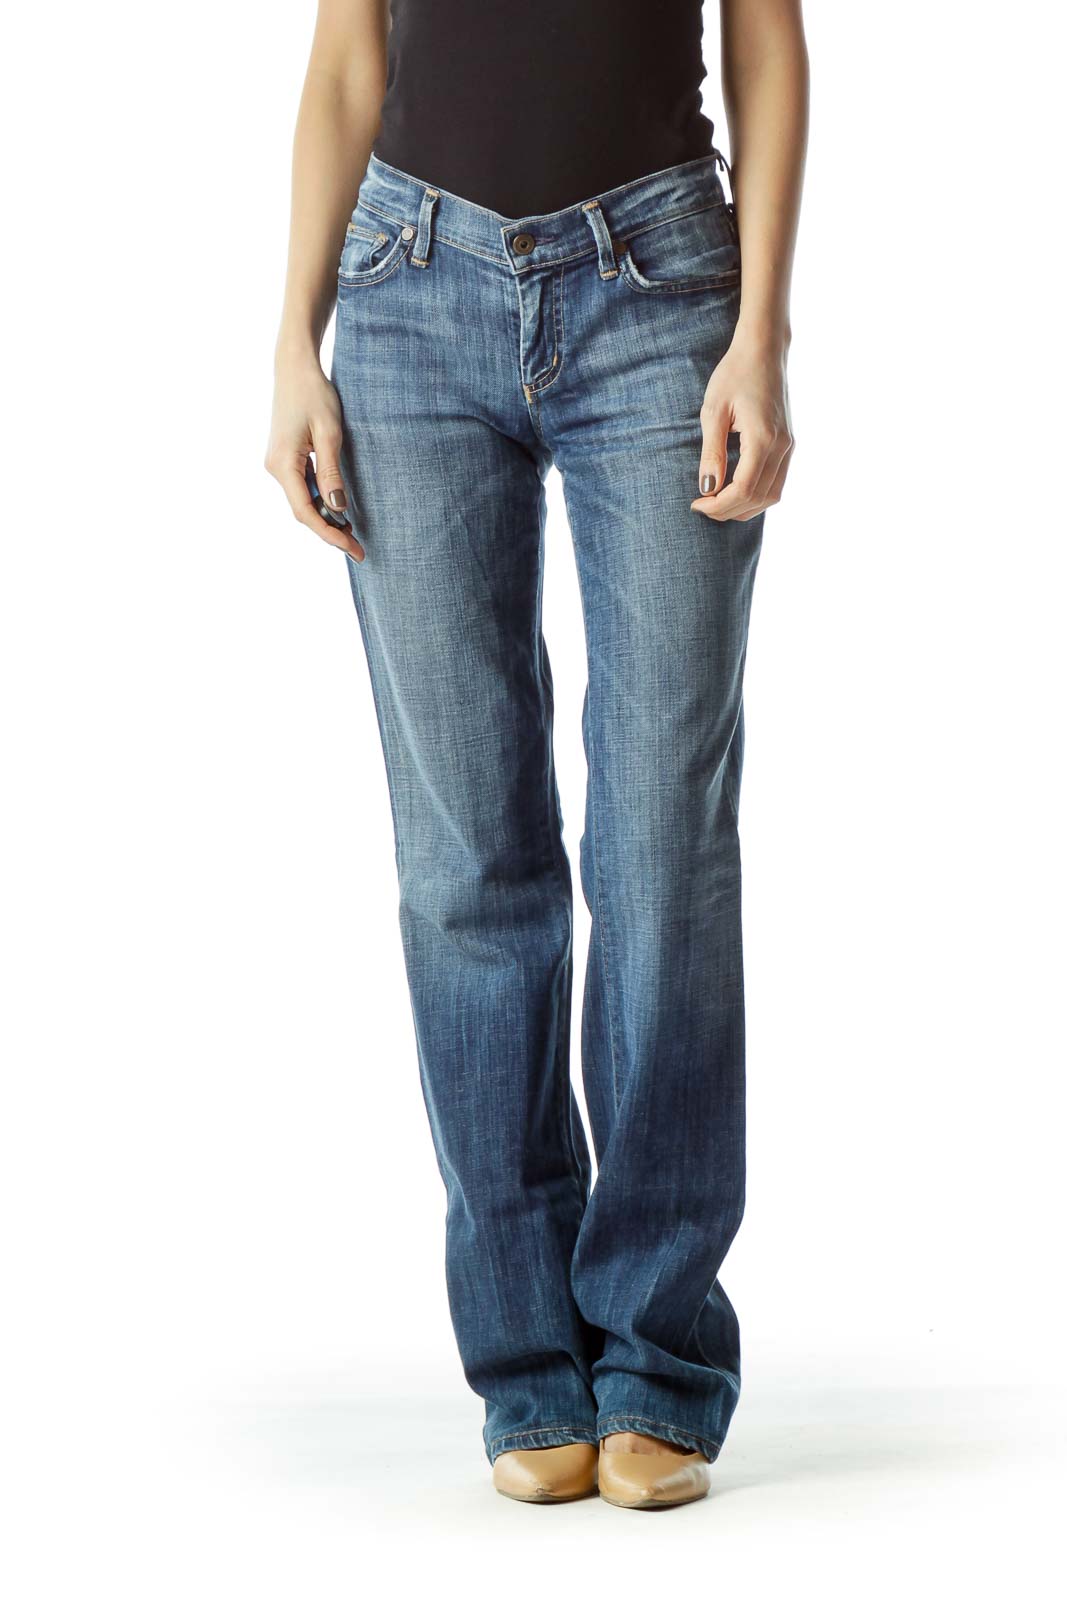 Blue Medium Wash Distressed Pockets Denim Jeans Front